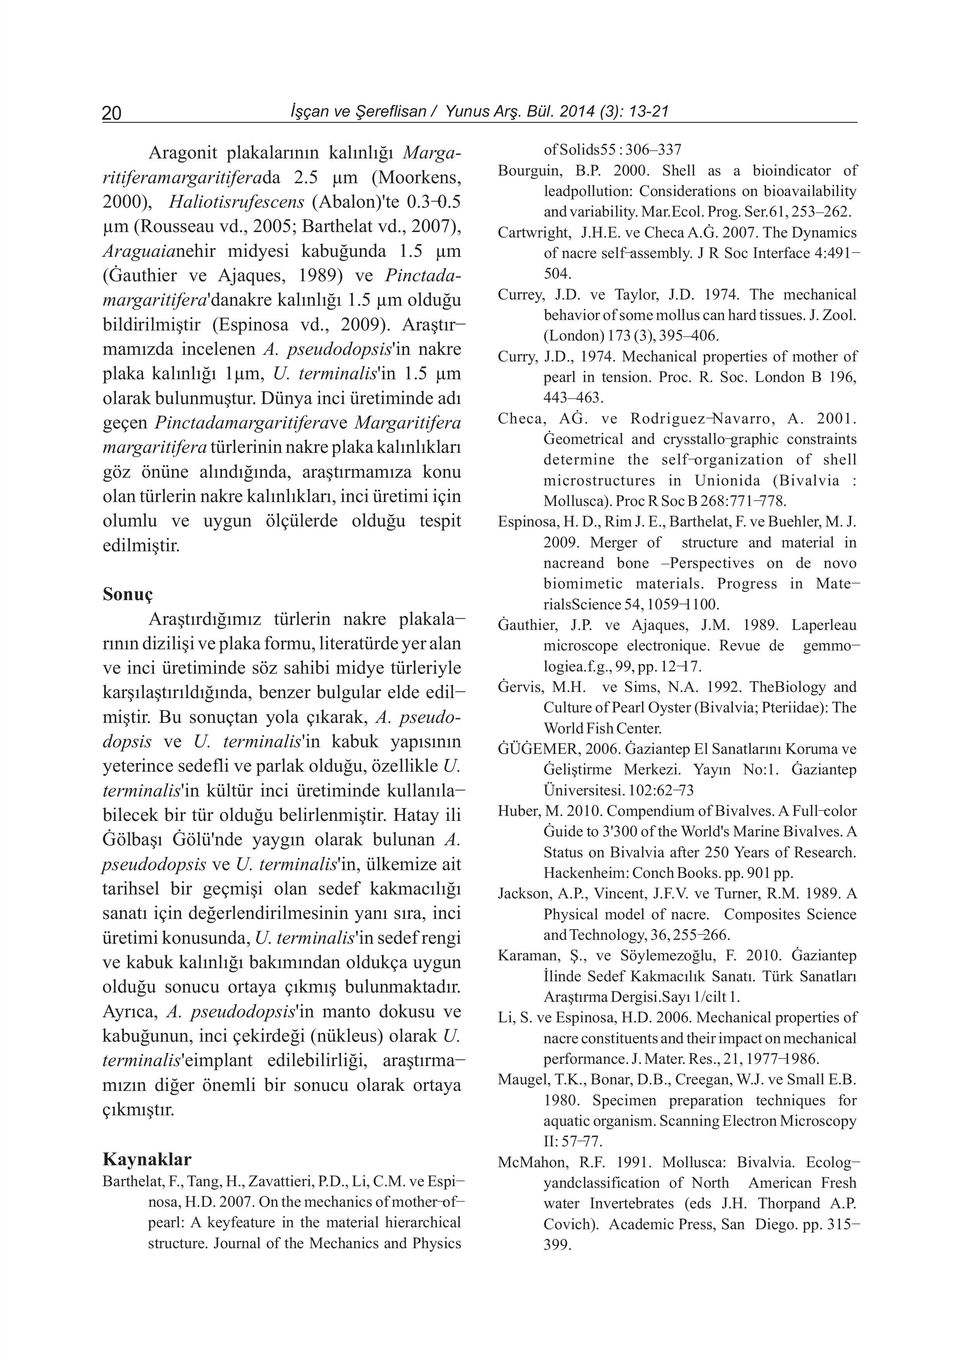 , 2005; Barthelat vd., 2007), Cartwright, J.H.E. ve Checa A.G. 2007. The Dynamics Araguaianehir midyesi kabuðunda 1.5 µm of nacre self-assembly.